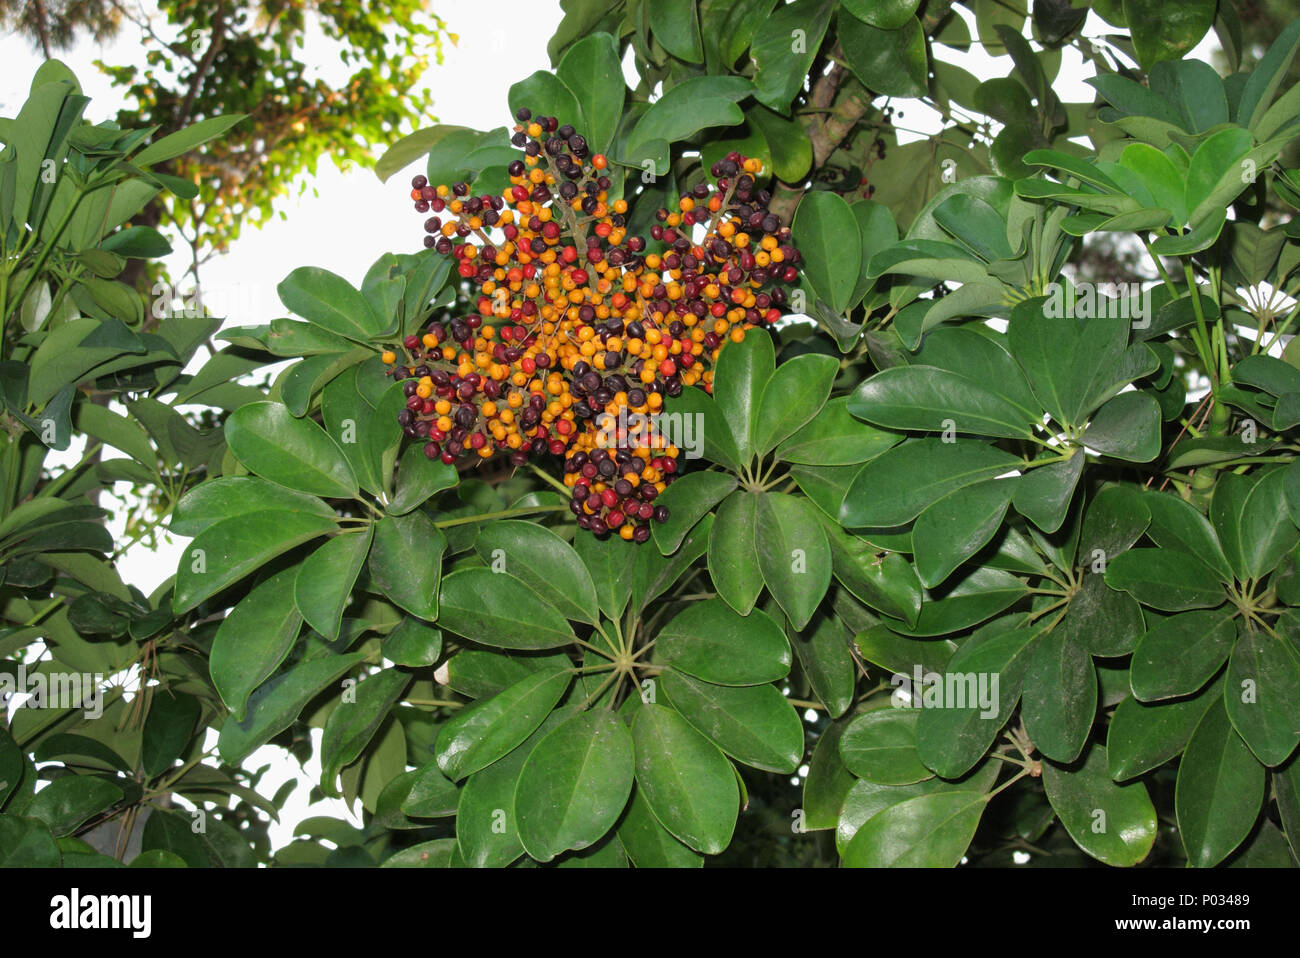 Schefflera arboricola with fruits Stock Photo